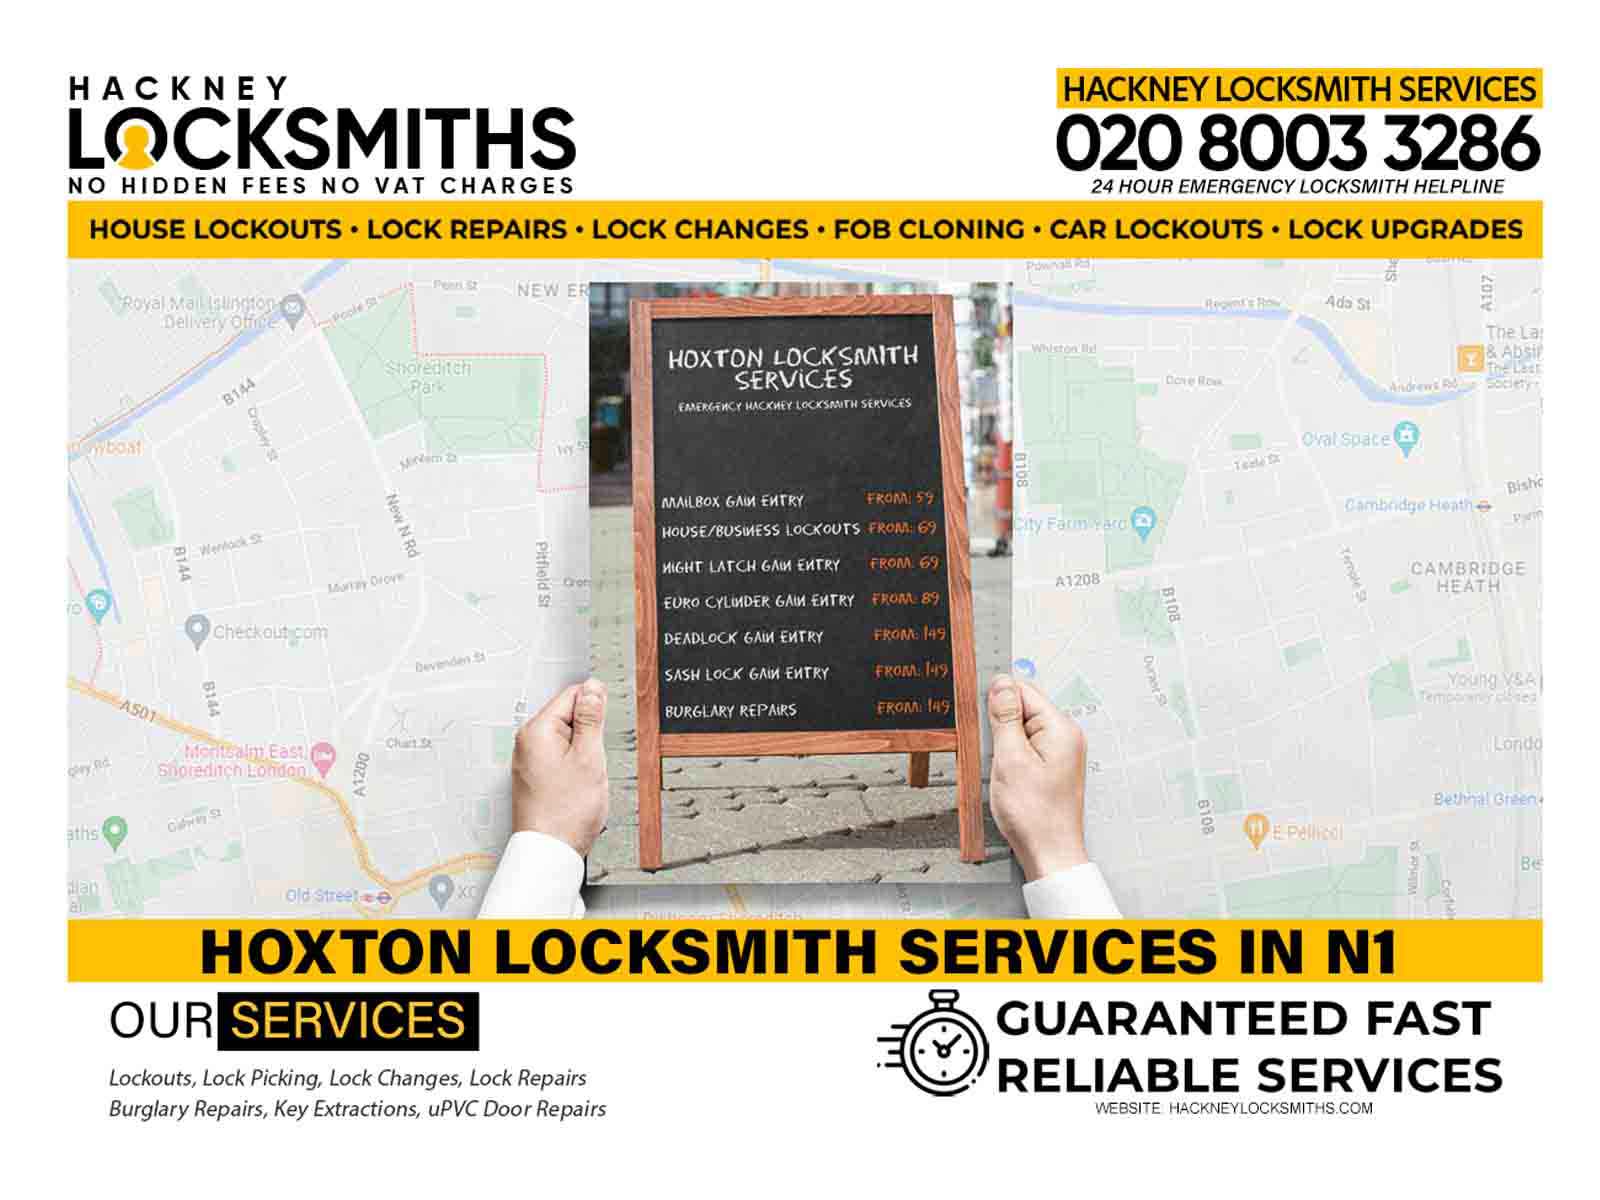 Hackney Locksmith Services